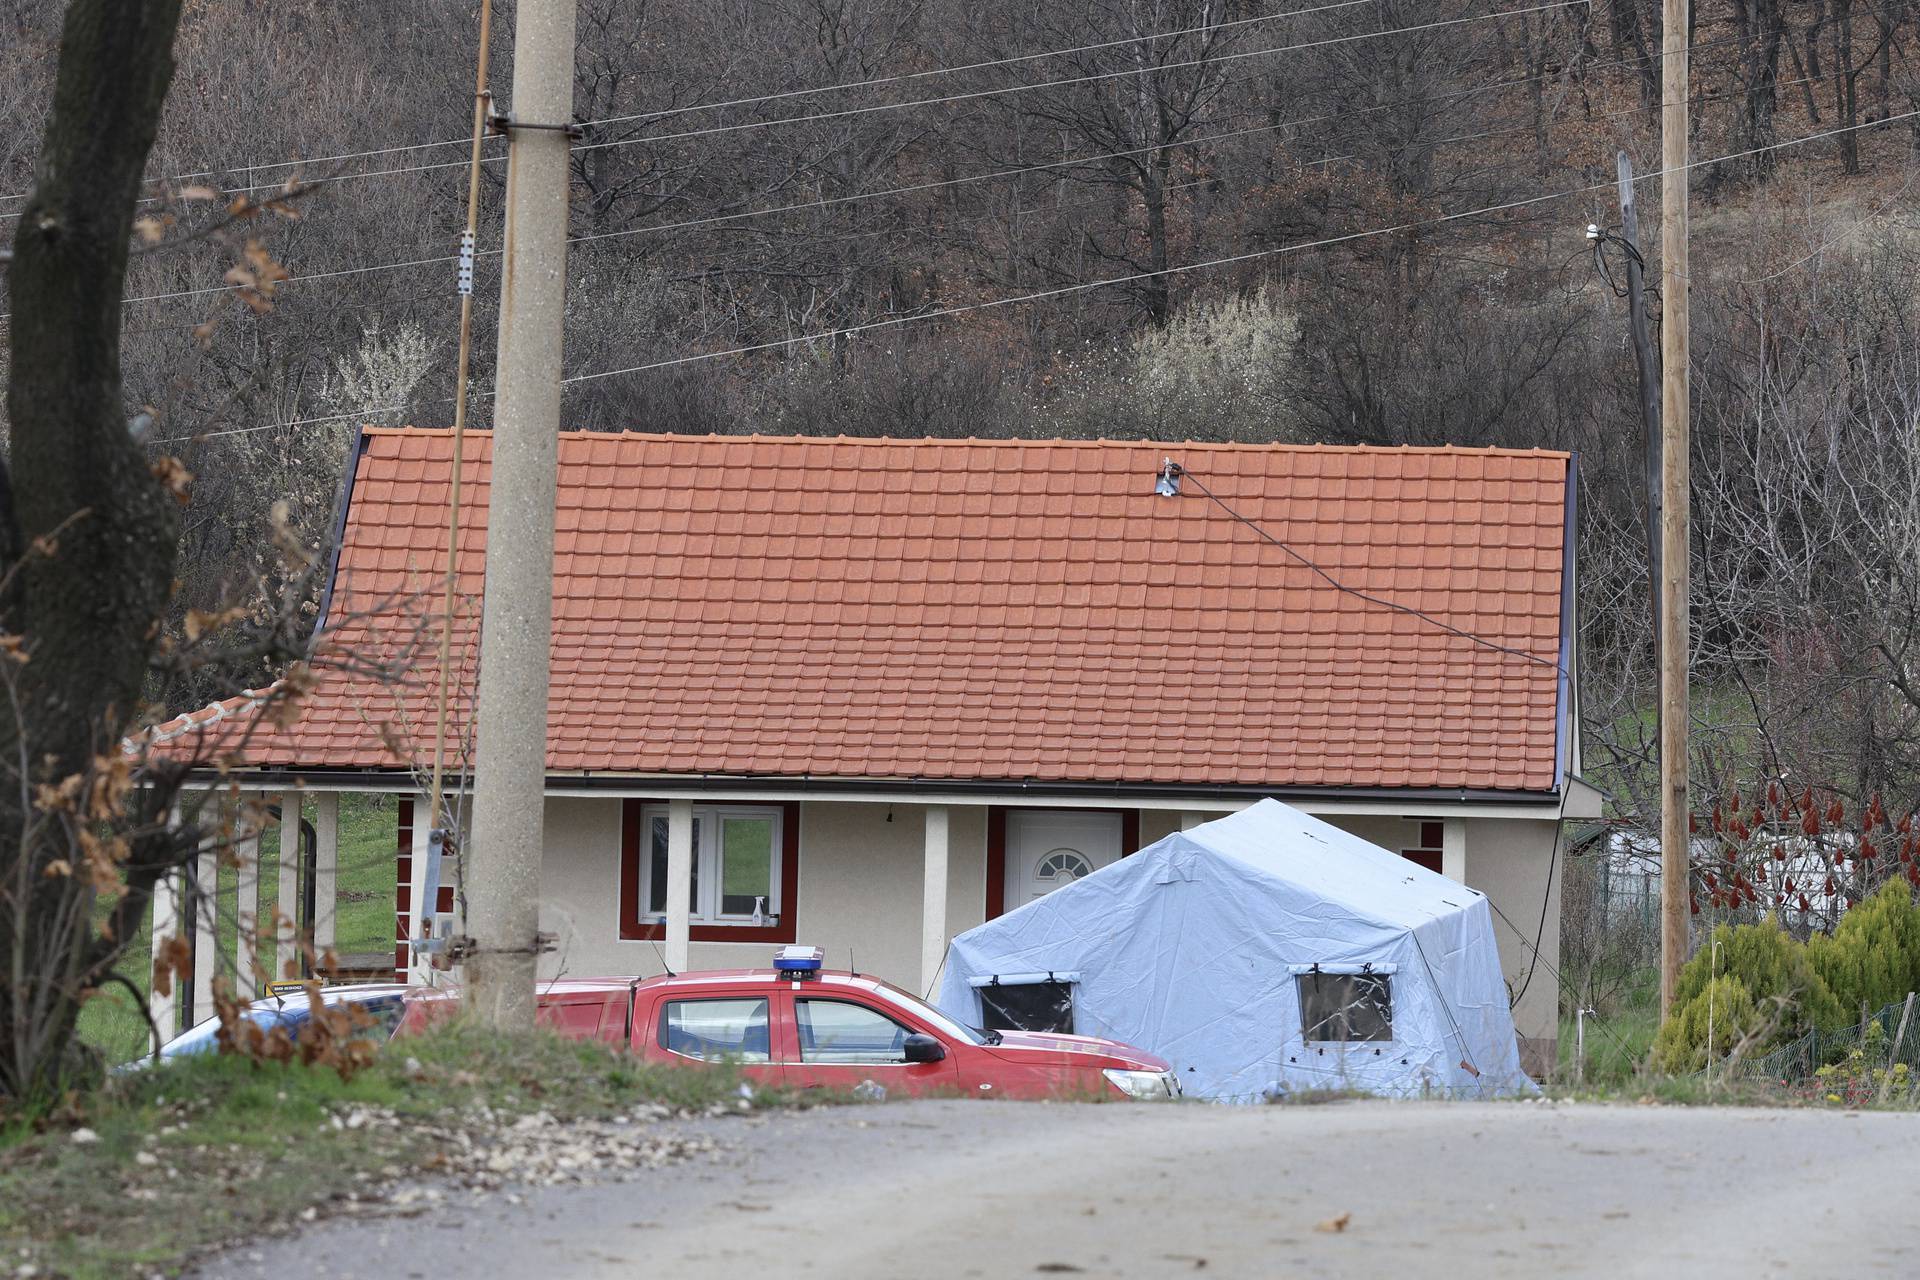 Srbija: Treći dan potrage za nestalom djevojčicom Dankom, policija kopa teren, stigao i bager